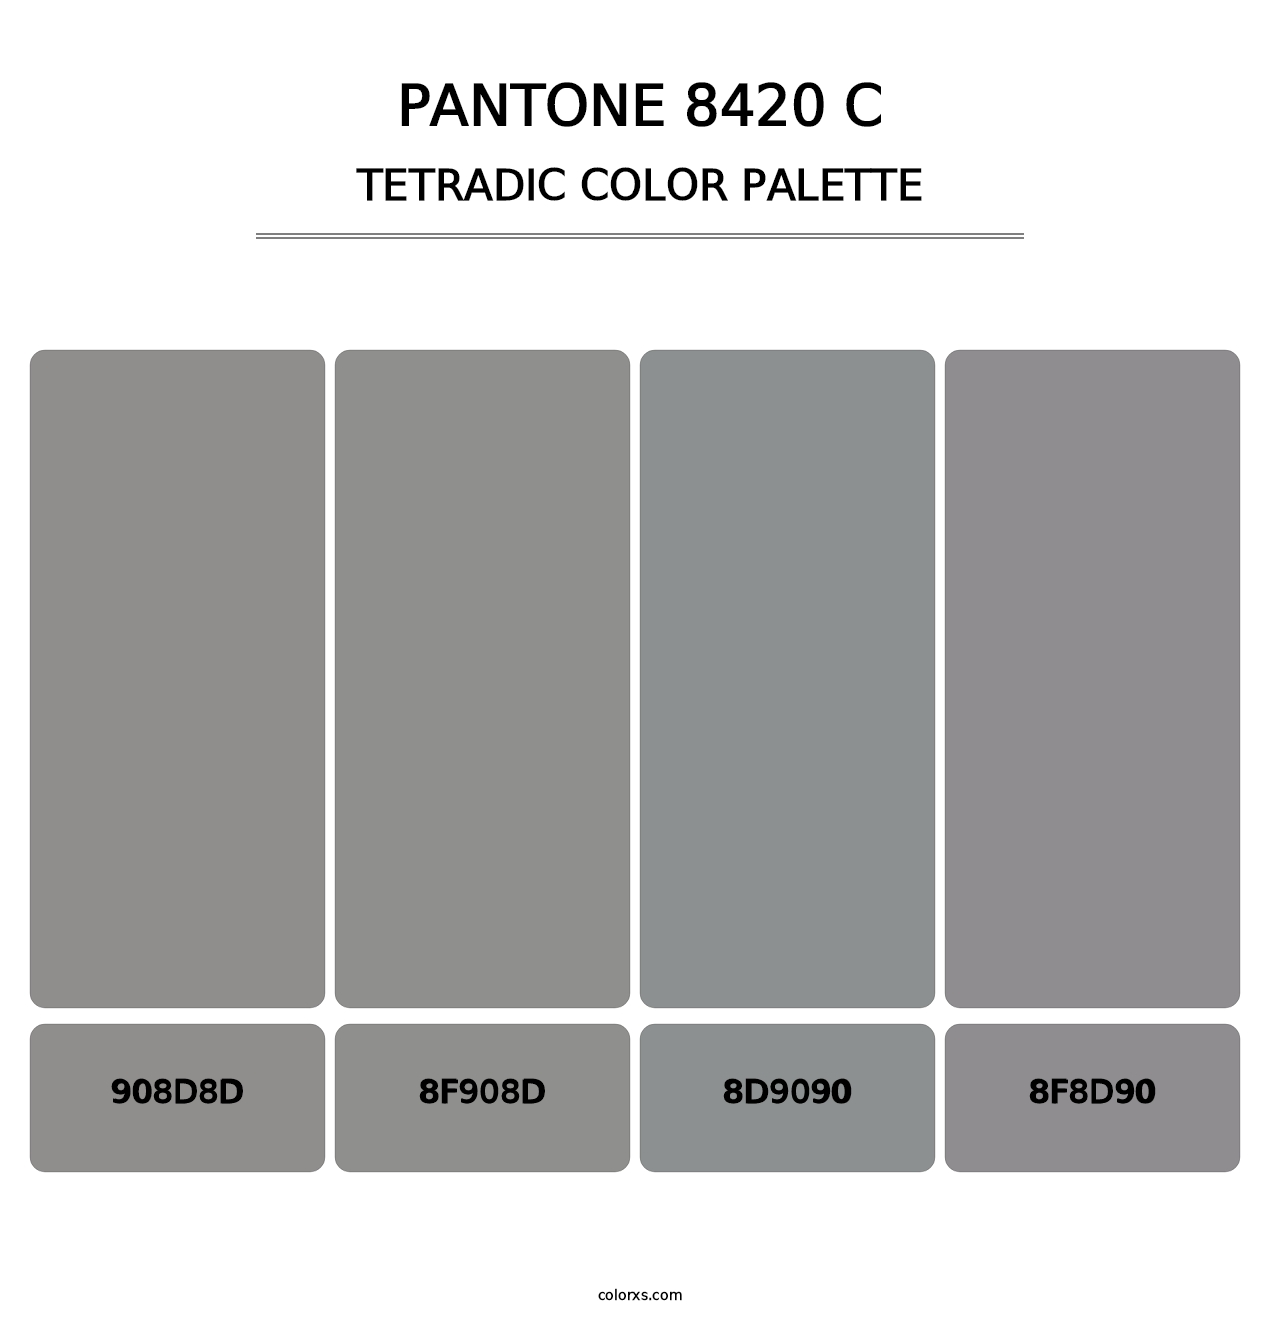 PANTONE 8420 C - Tetradic Color Palette